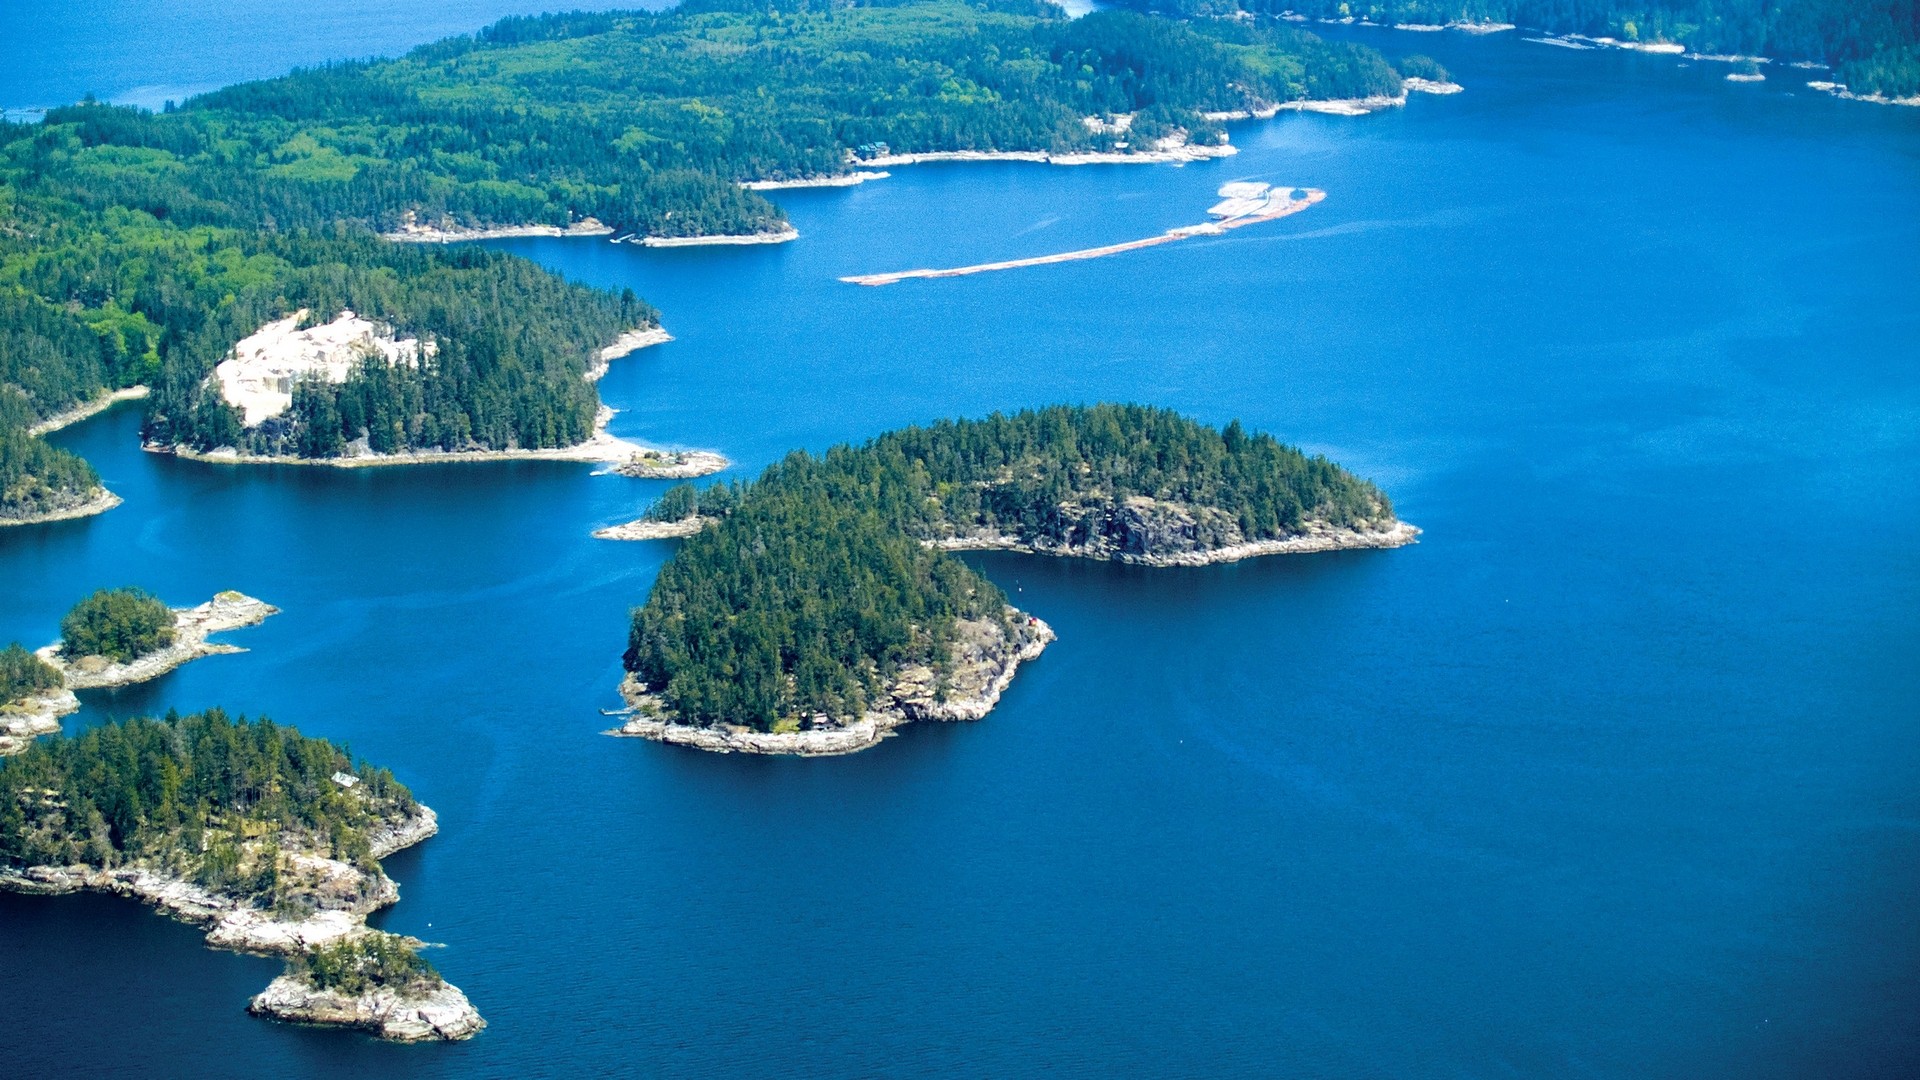 General 1920x1080 nature landscape forest island British Columbia sea blue green aerial view beach Canada